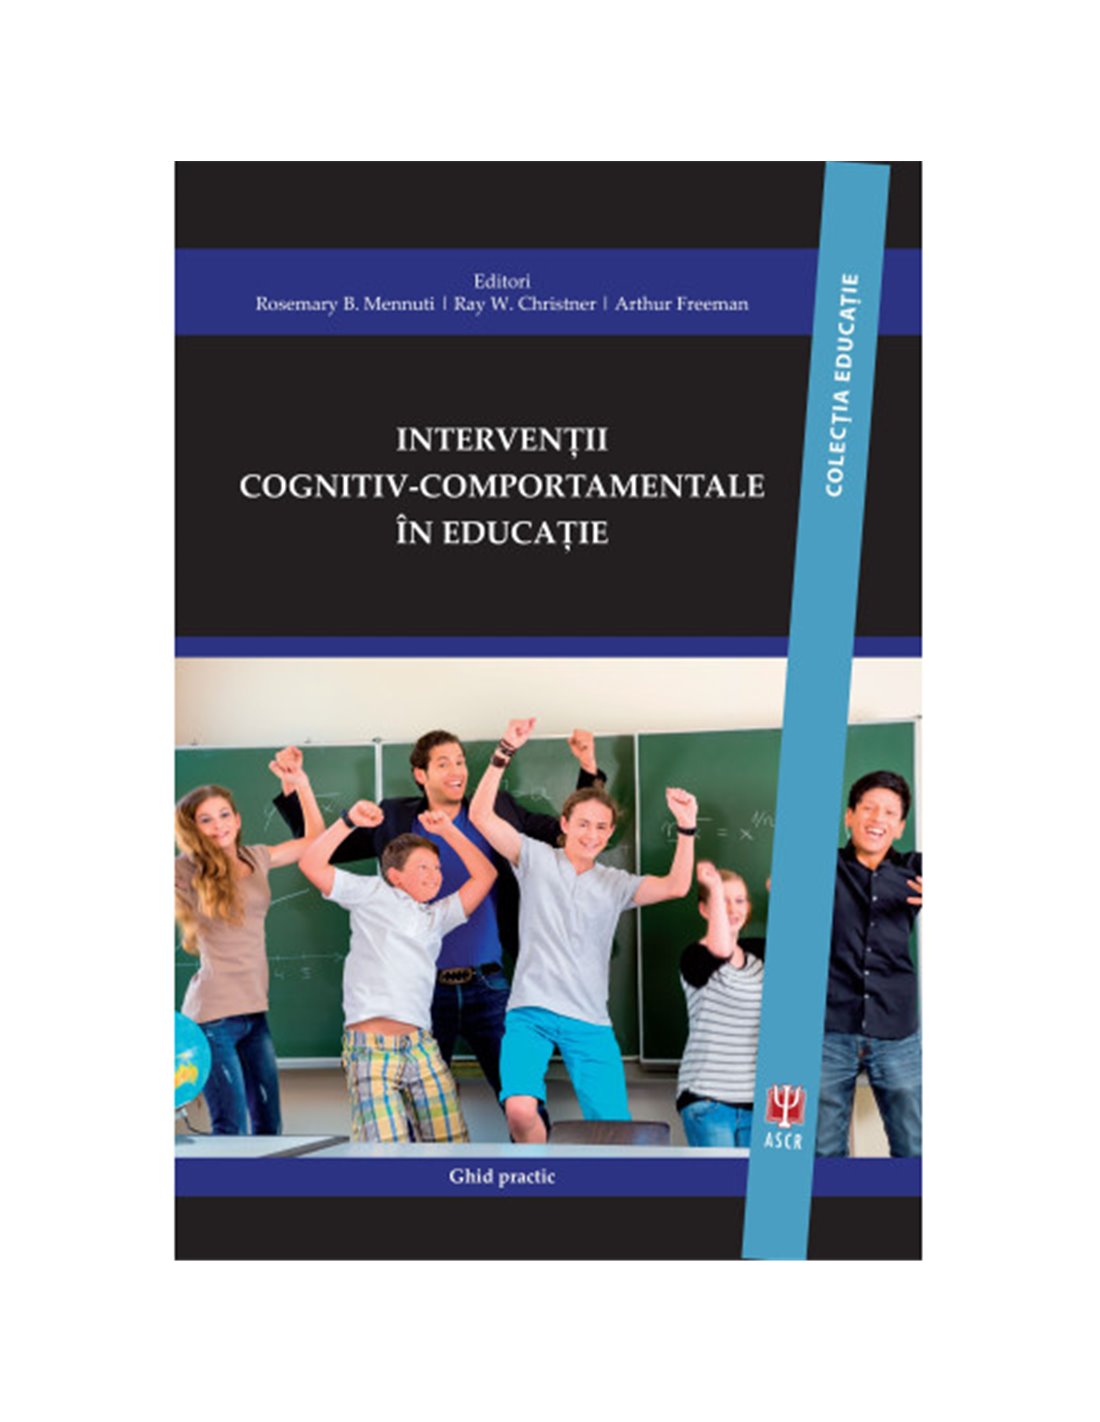 Interventii cognitiv-comportamentale in educatie - Mennuti B.Rosemary, Christner W. Ray, Freeman Arthur (Editori) |  ASCRED